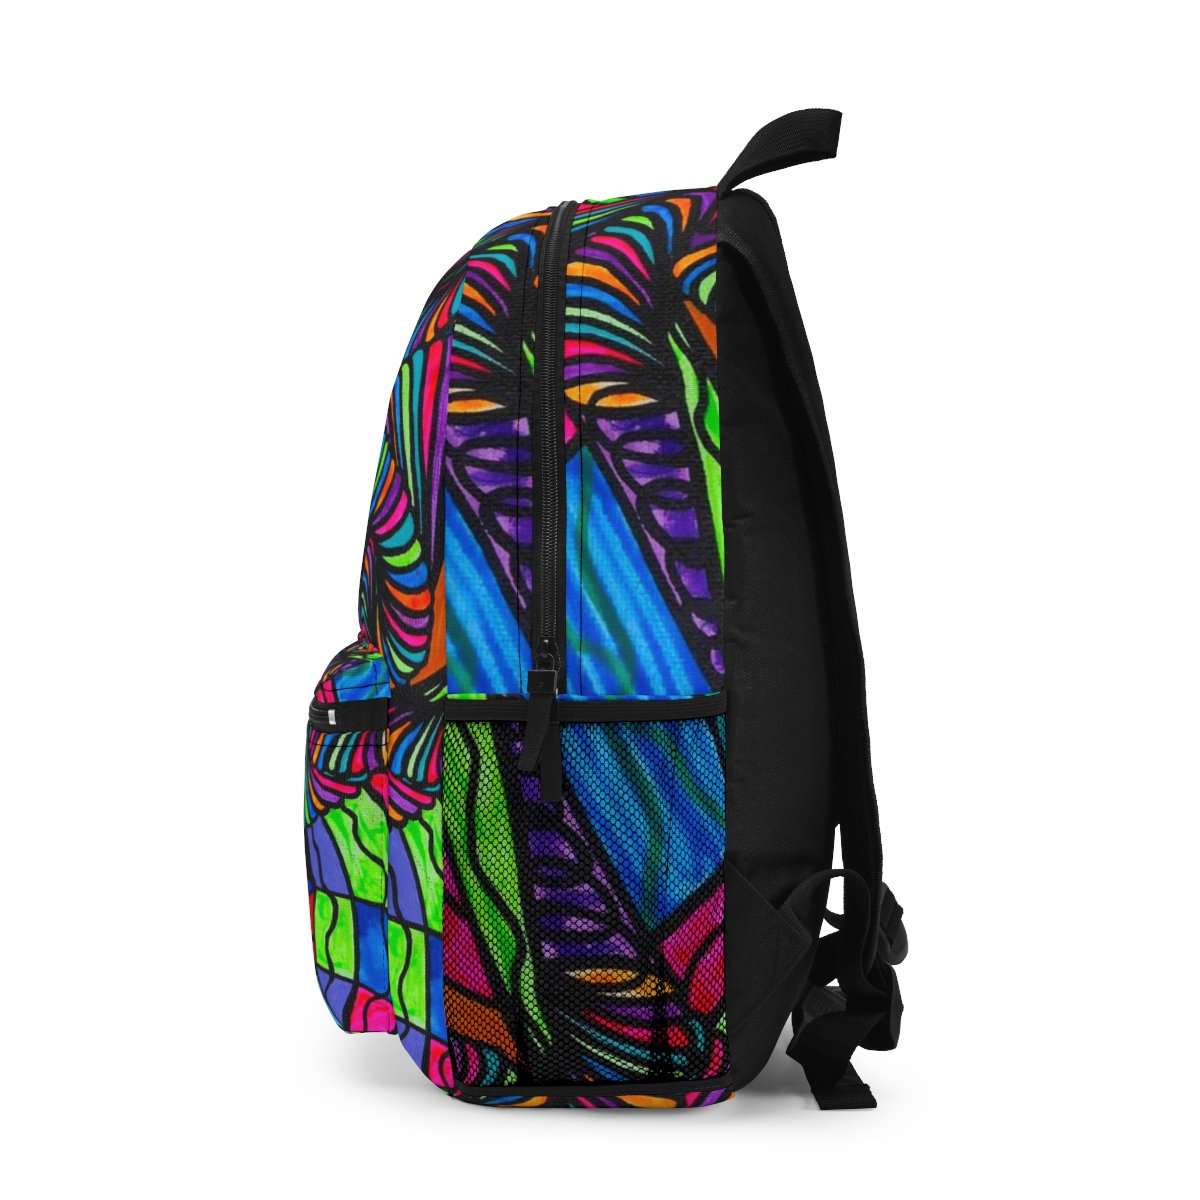 make-your-order-official-of-burgeon-aop-backpack-on-sale_2.jpg